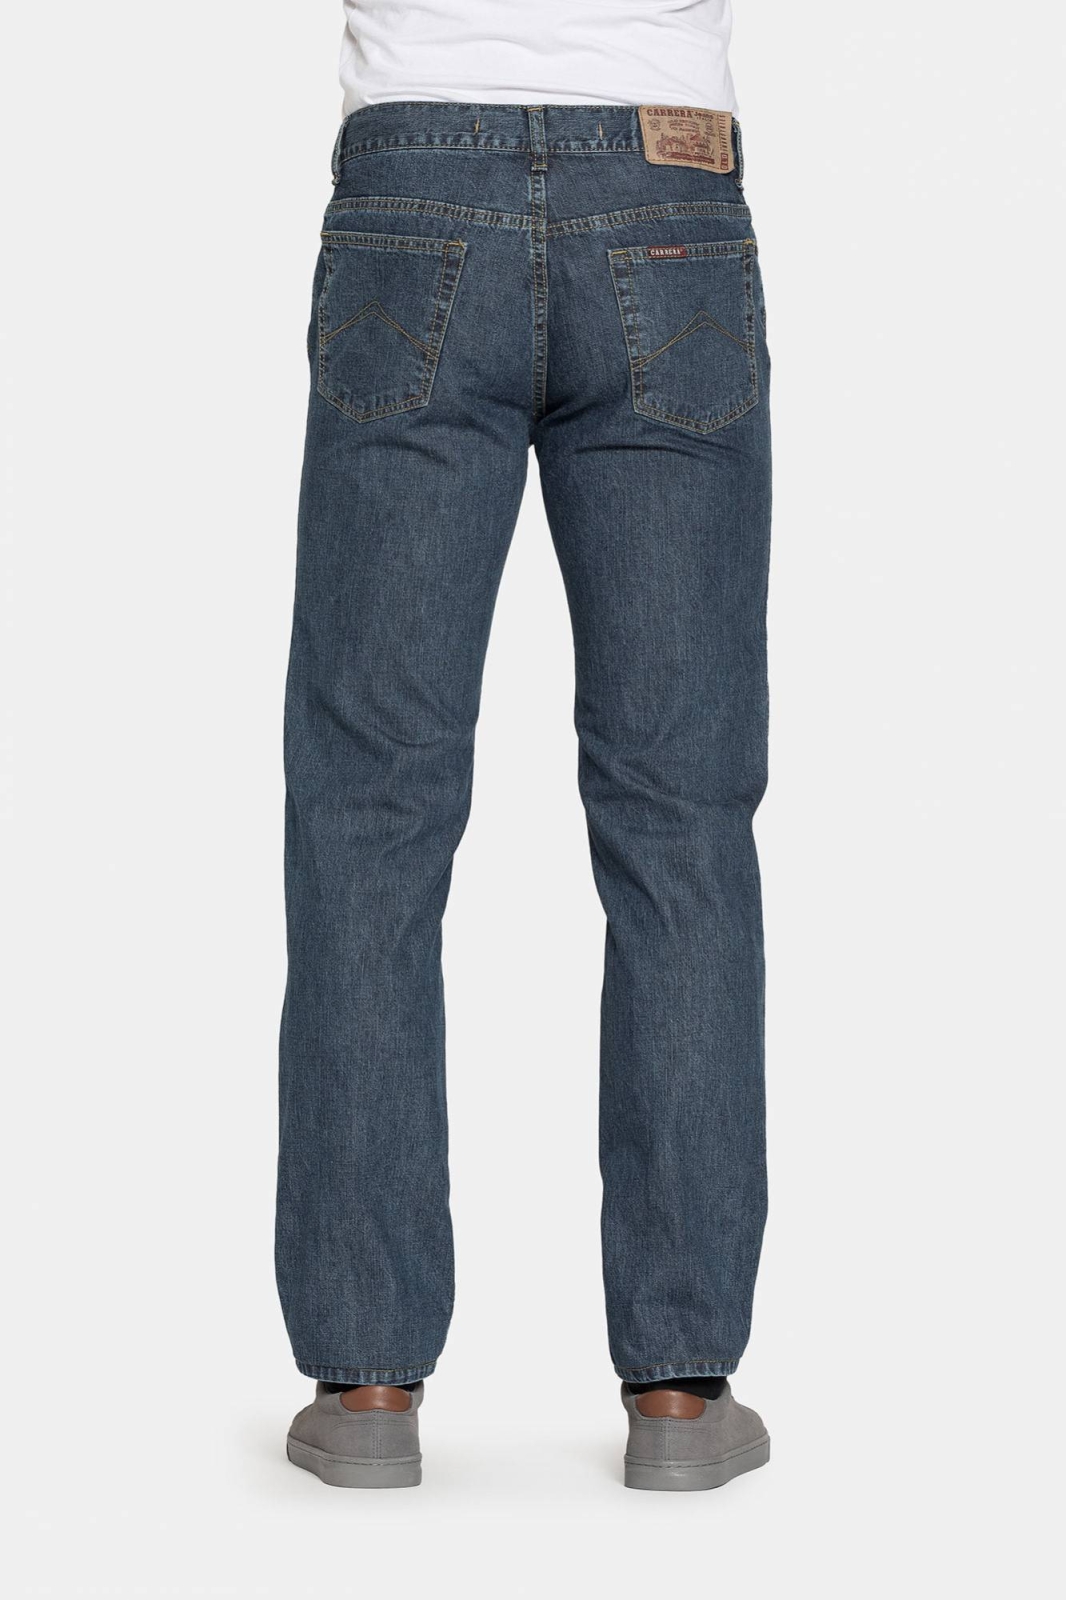 Online Boutique Cyprus | No Limits Fashion | Light Jeans Style 700 100%  Cotton. Comfortable leg and regular waist - Blue